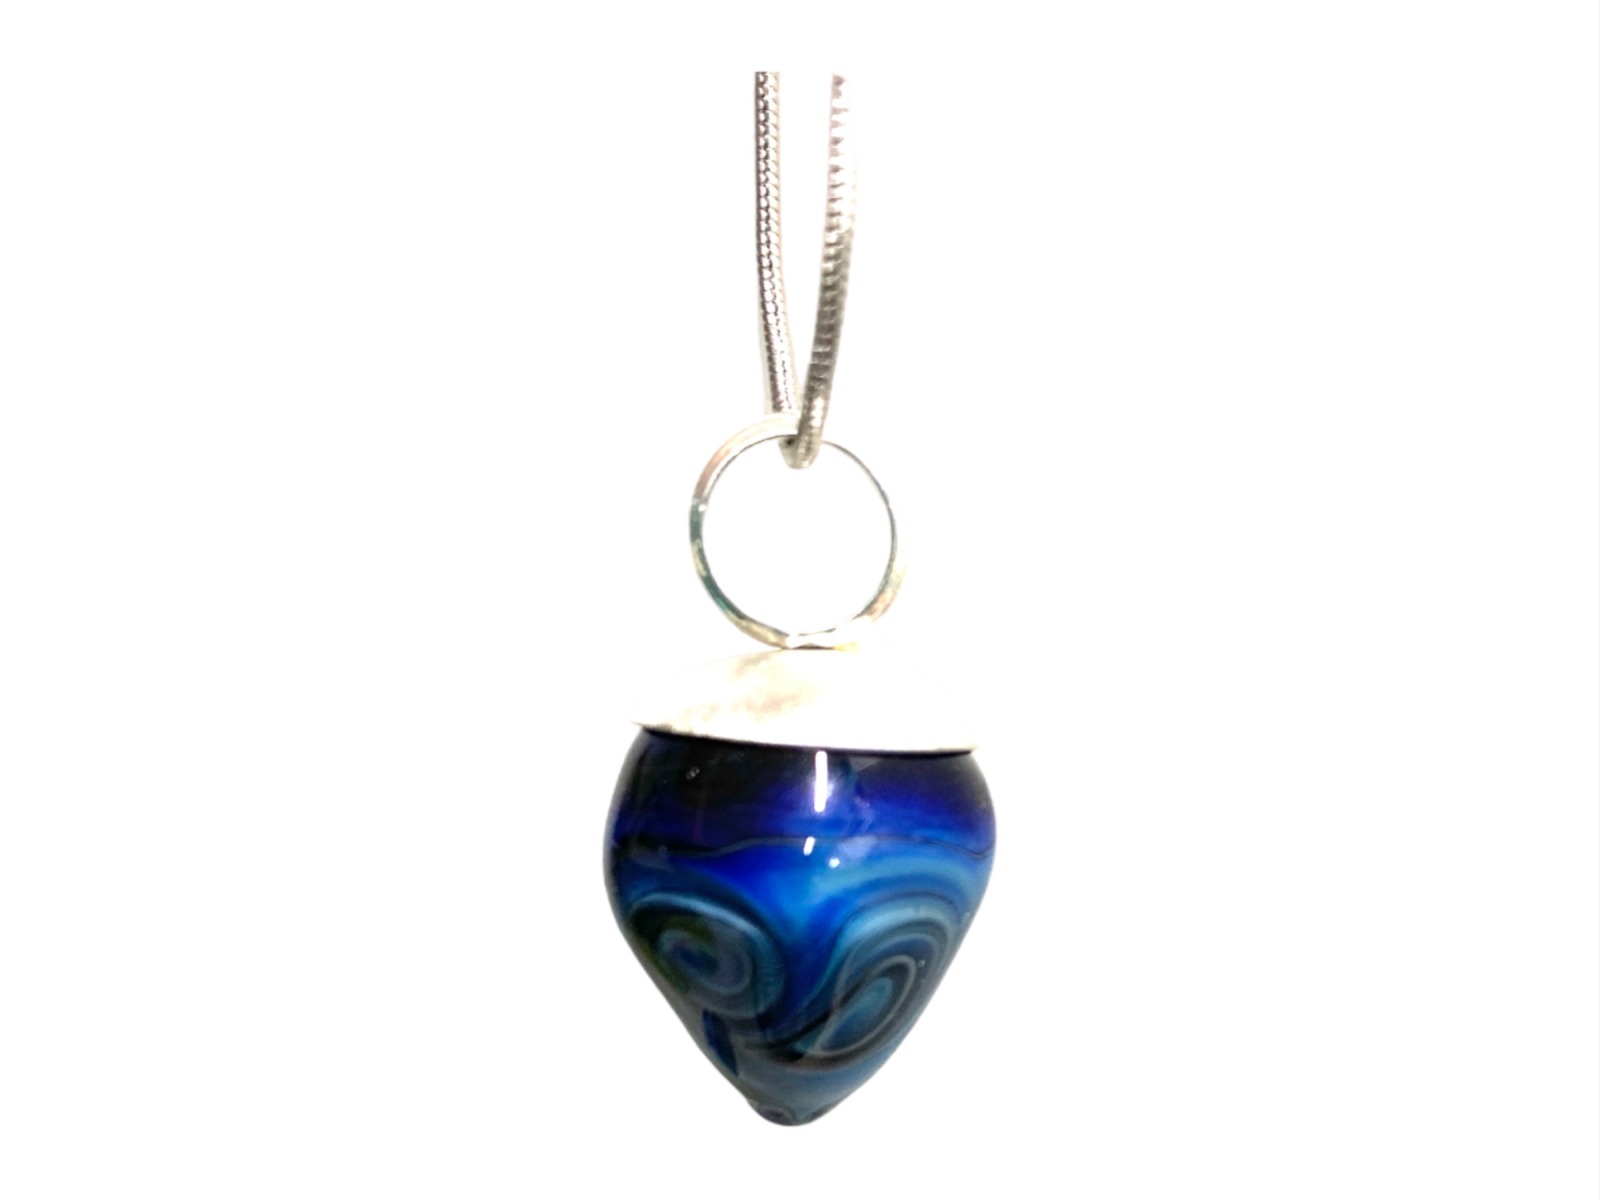 Iridescent Blue Hues - Shimmering Glass Pendant